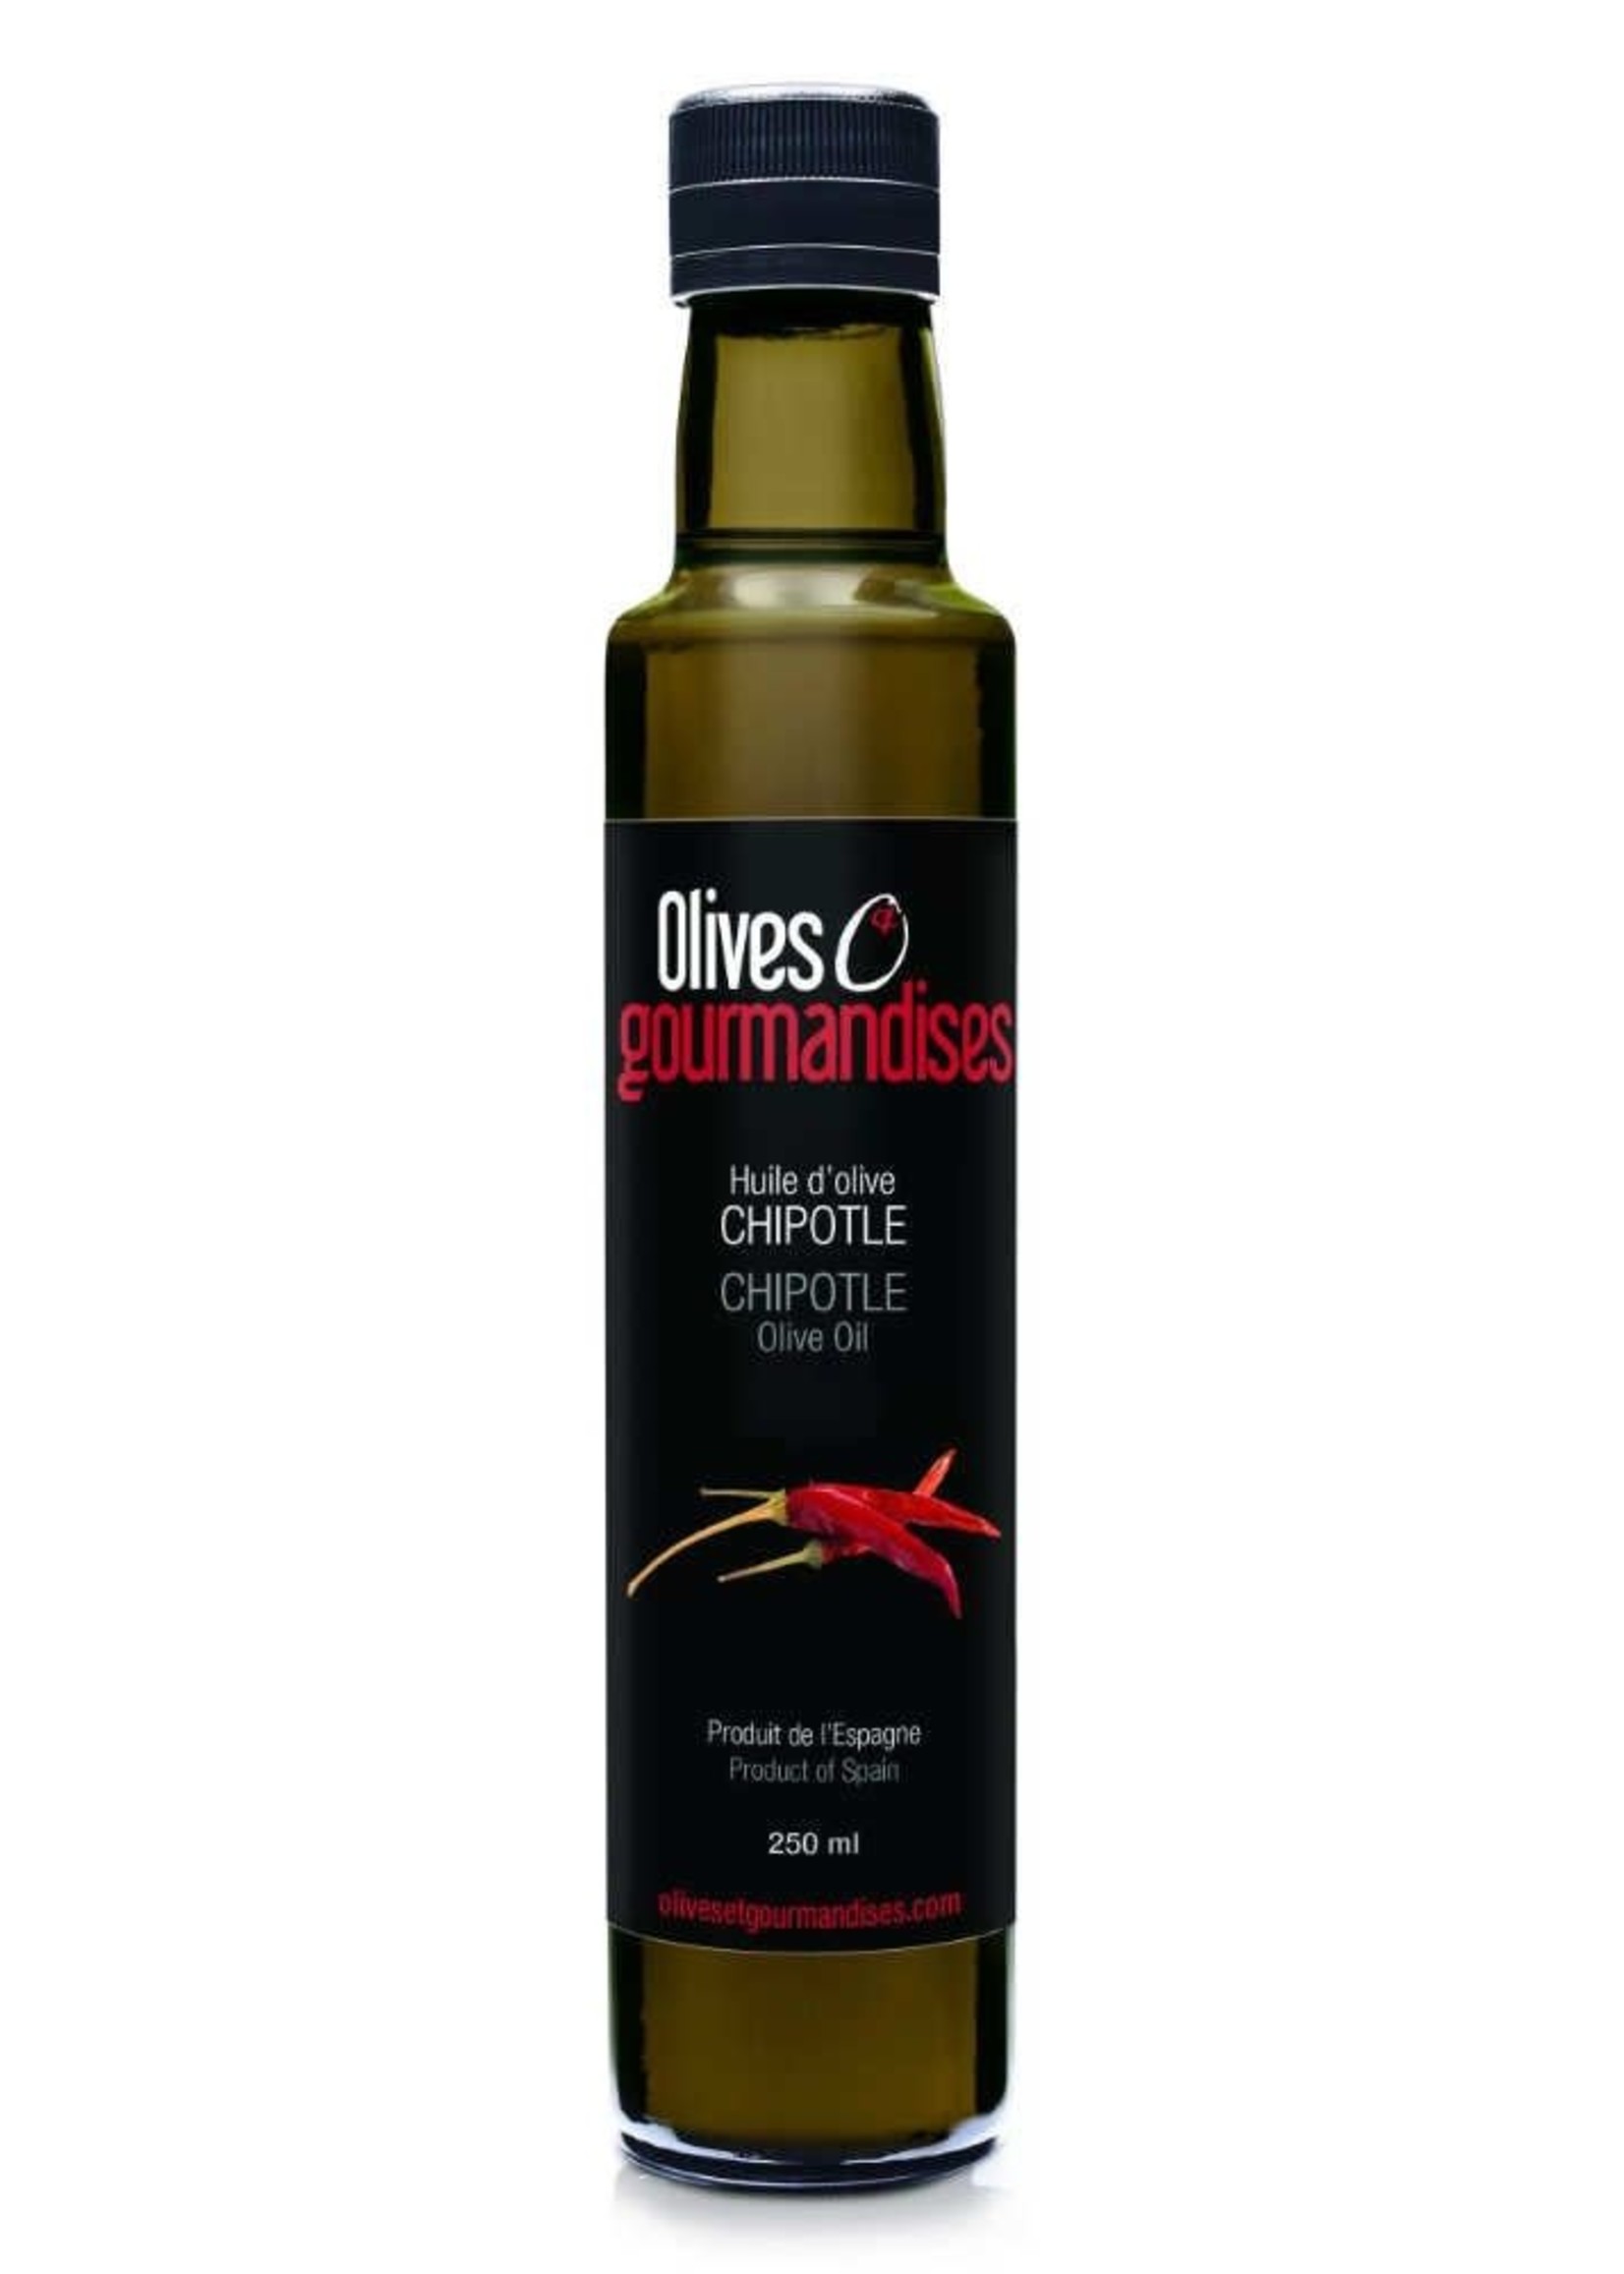 Olives & gourmandises Huiles d'olive aromatisés 250ml - Olives & gourmandises